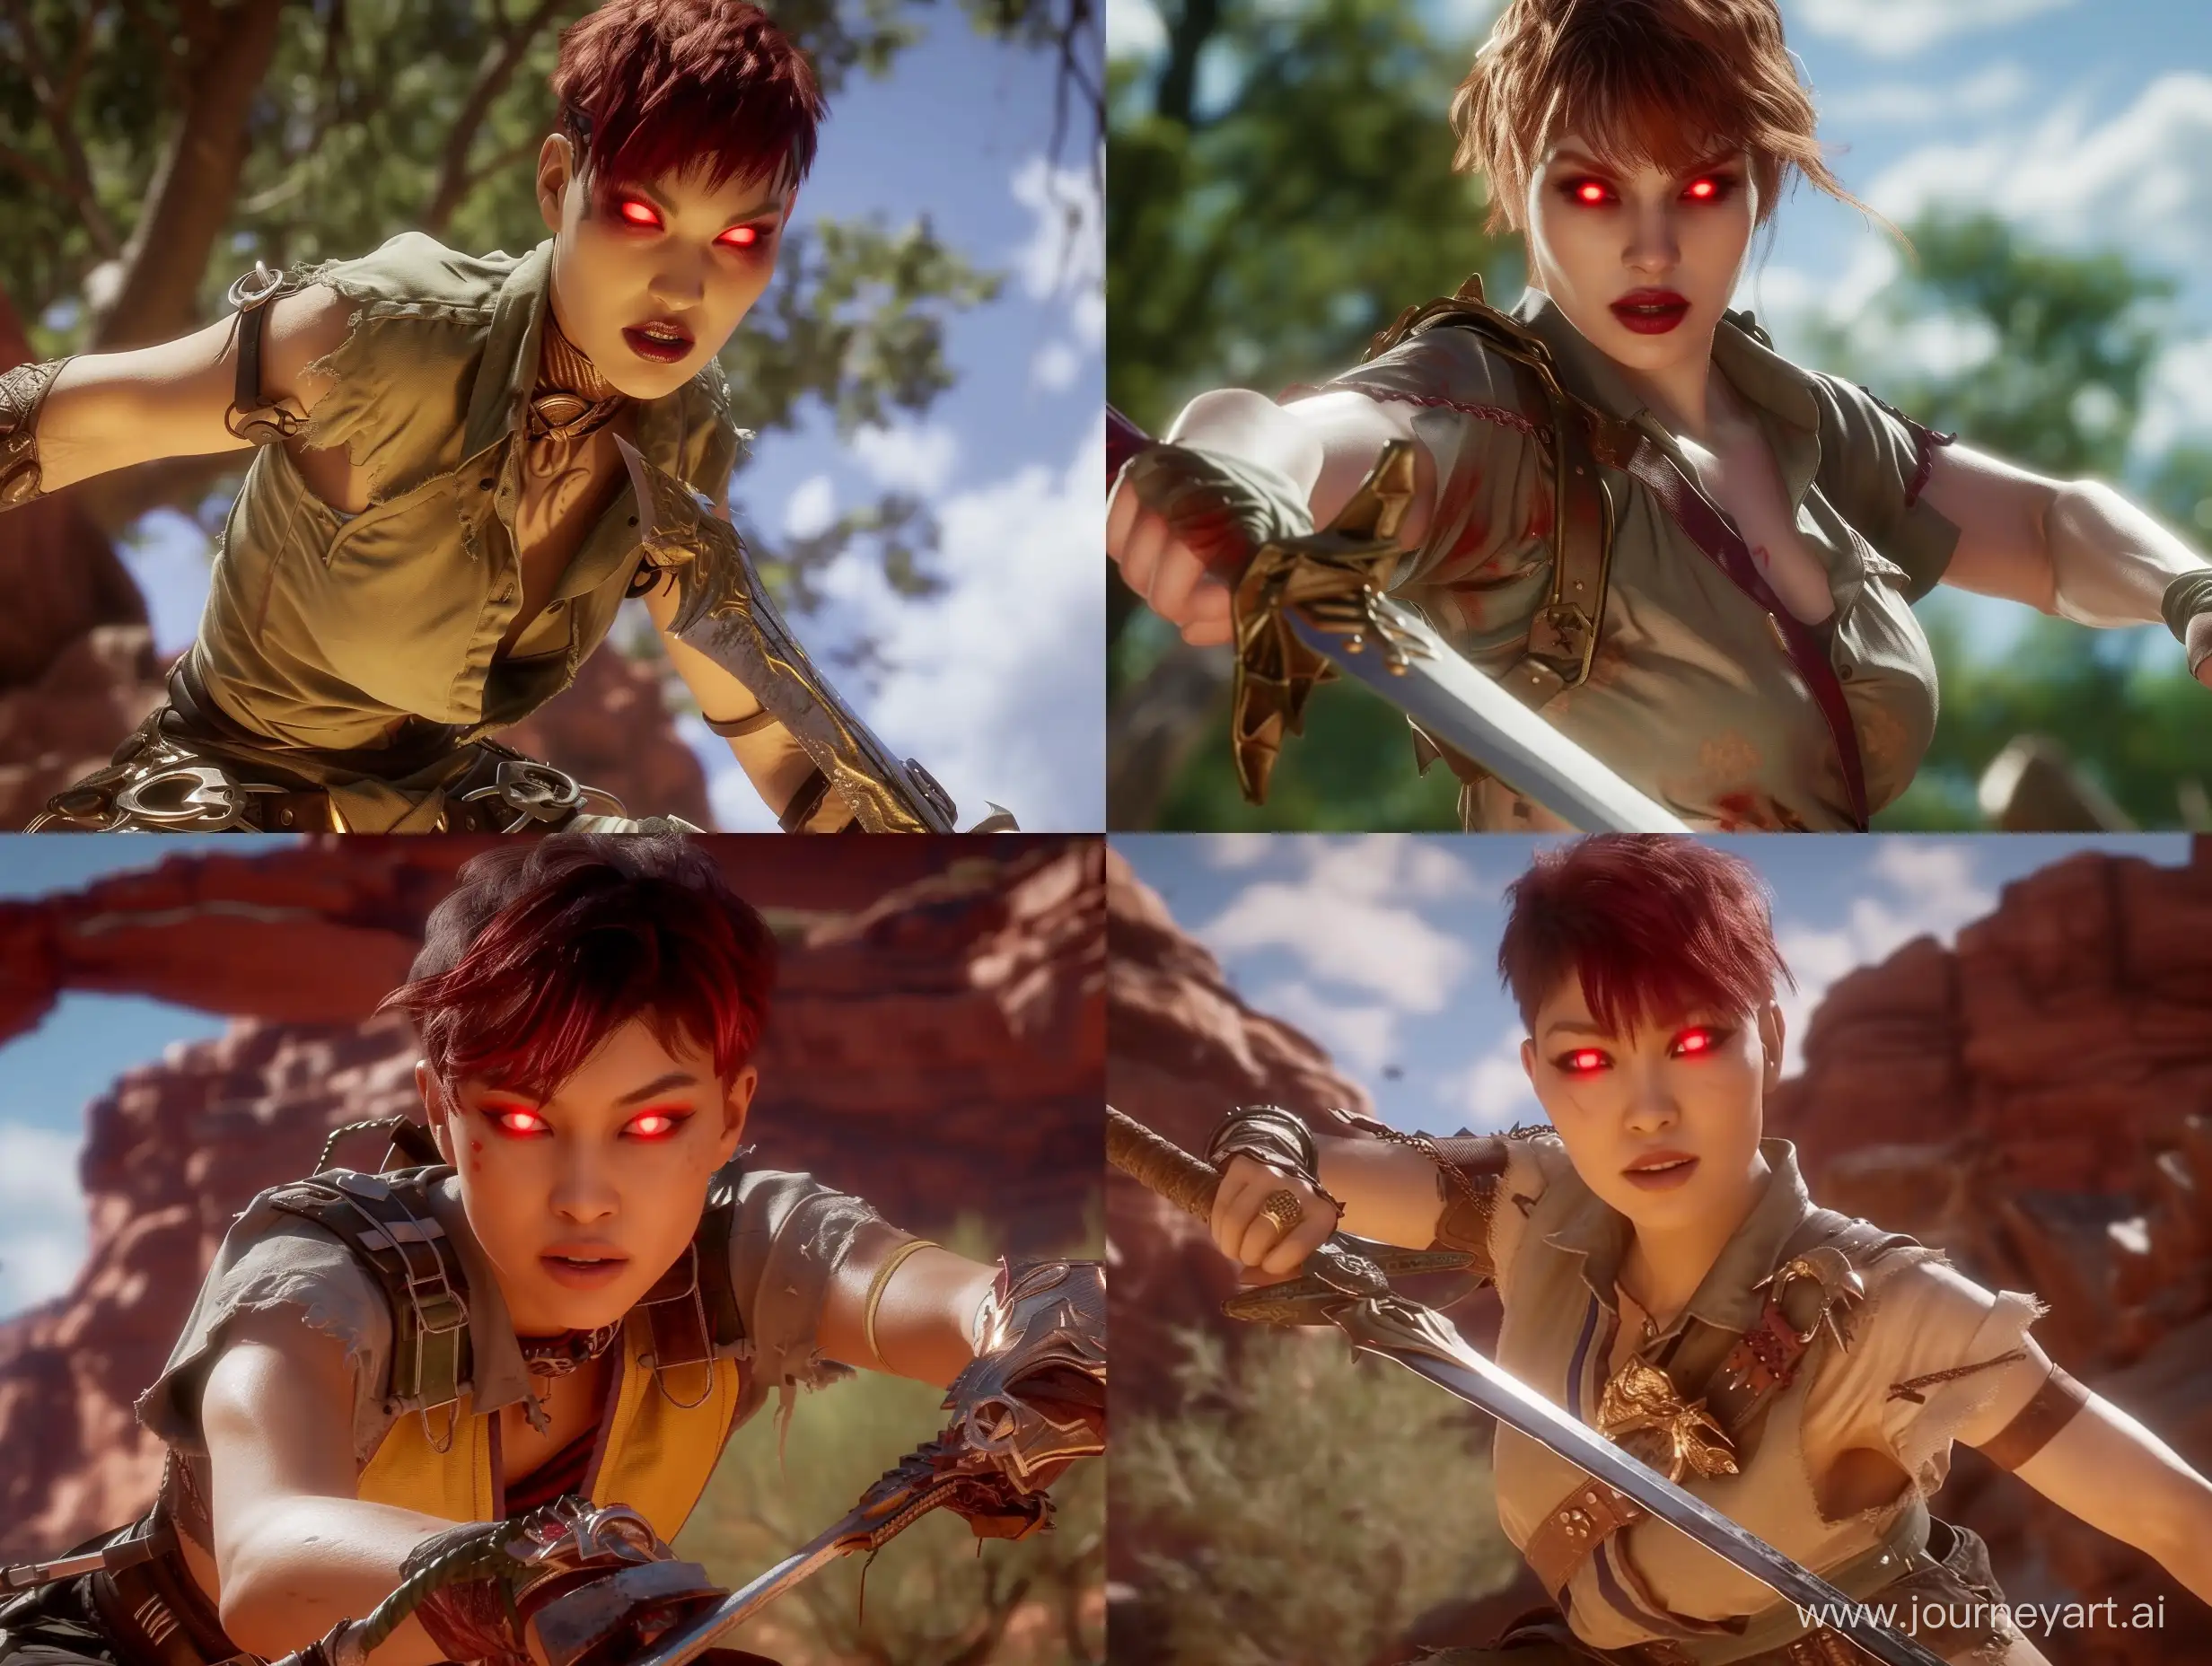 Fierce-RedHaired-Female-Warrior-of-Mortal-Kombat-11-Brandishing-a-Sword